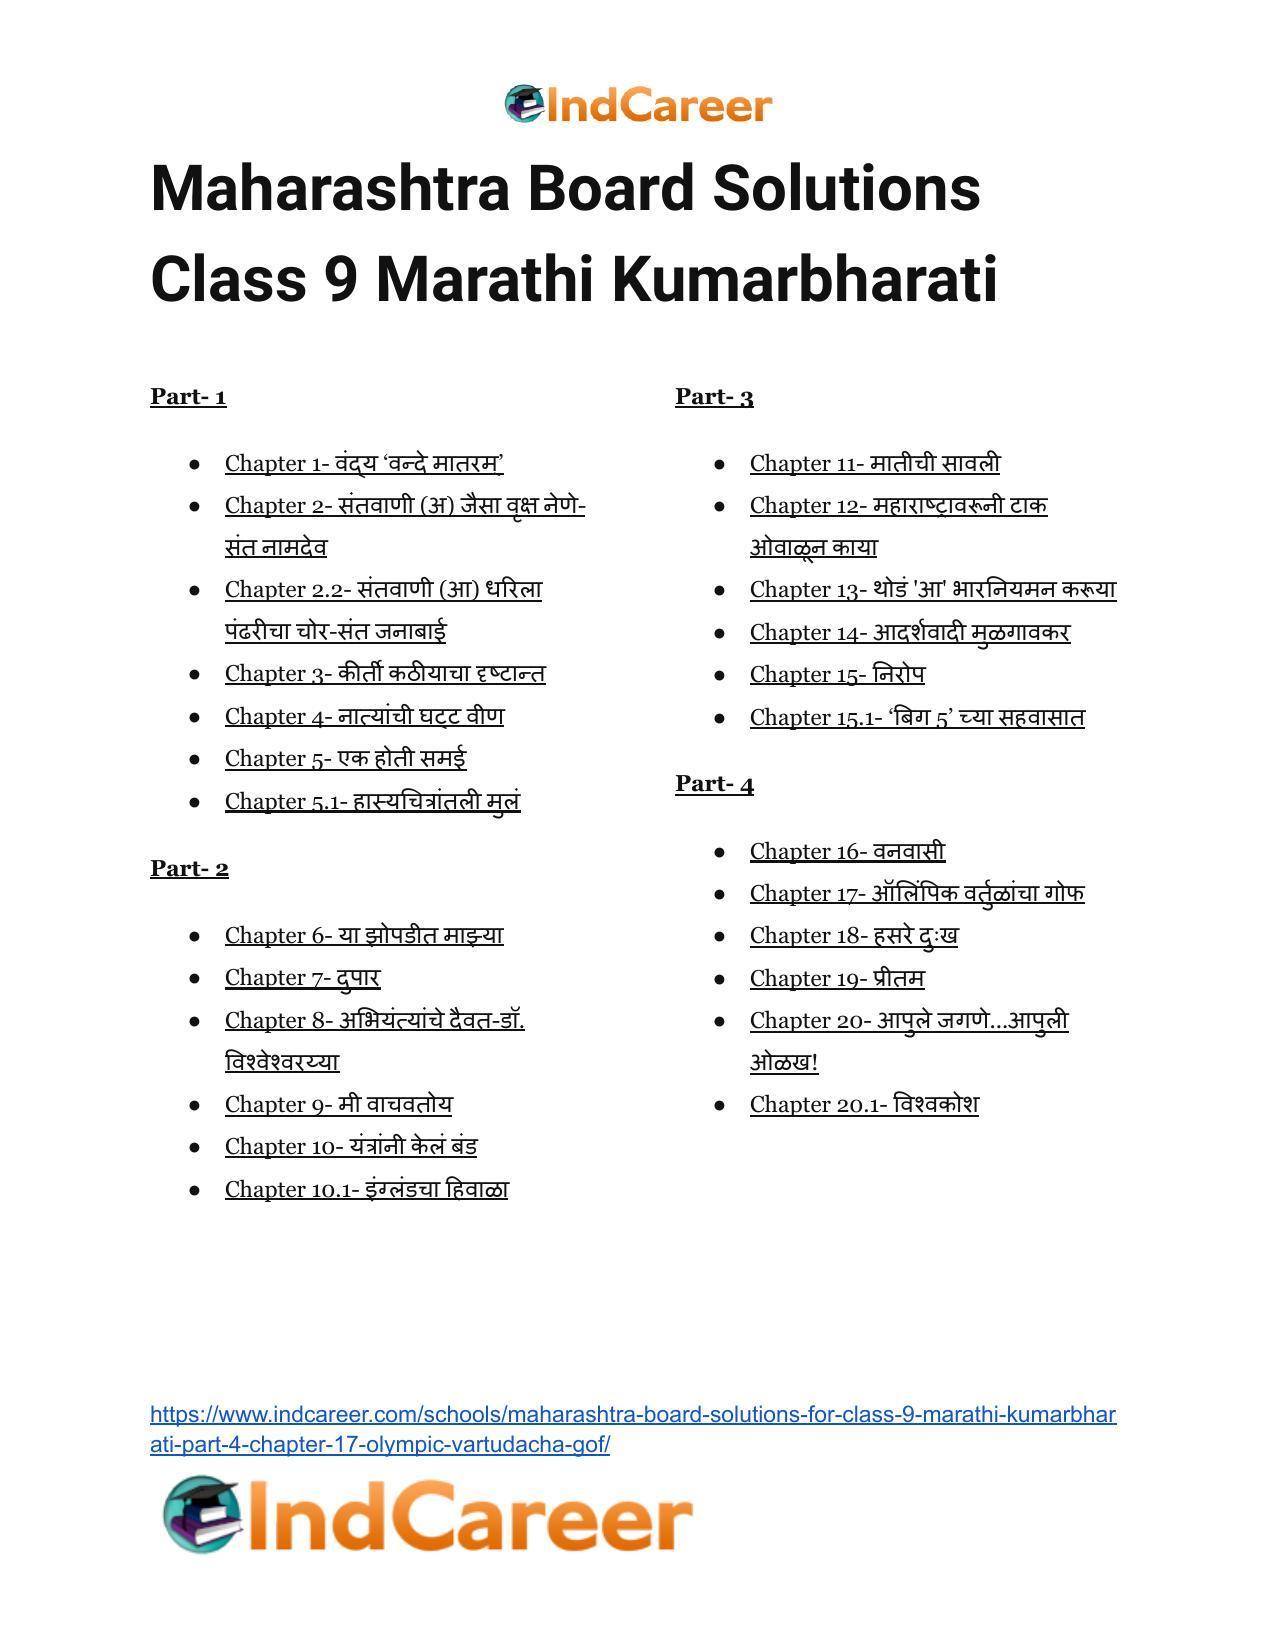 Maharashtra Board Solutions for Class 9- Marathi Kumarbharati (Part- 4): Chapter 17- ऑलिंपिक वर्तुळांचा गोफ - Page 22